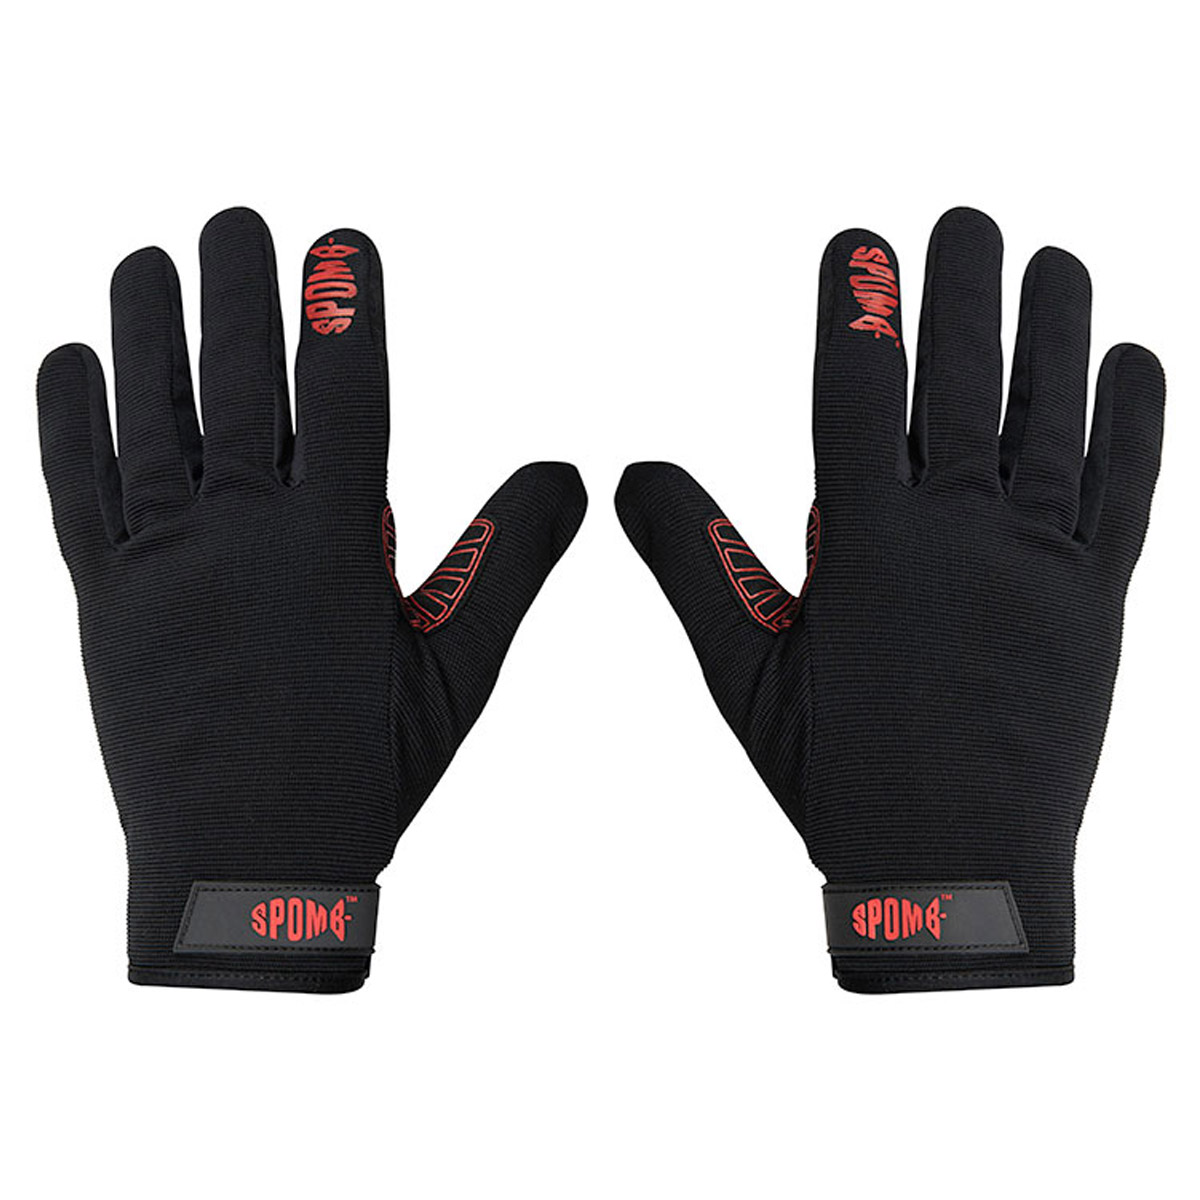 Spomb Pro Casting Gloves 